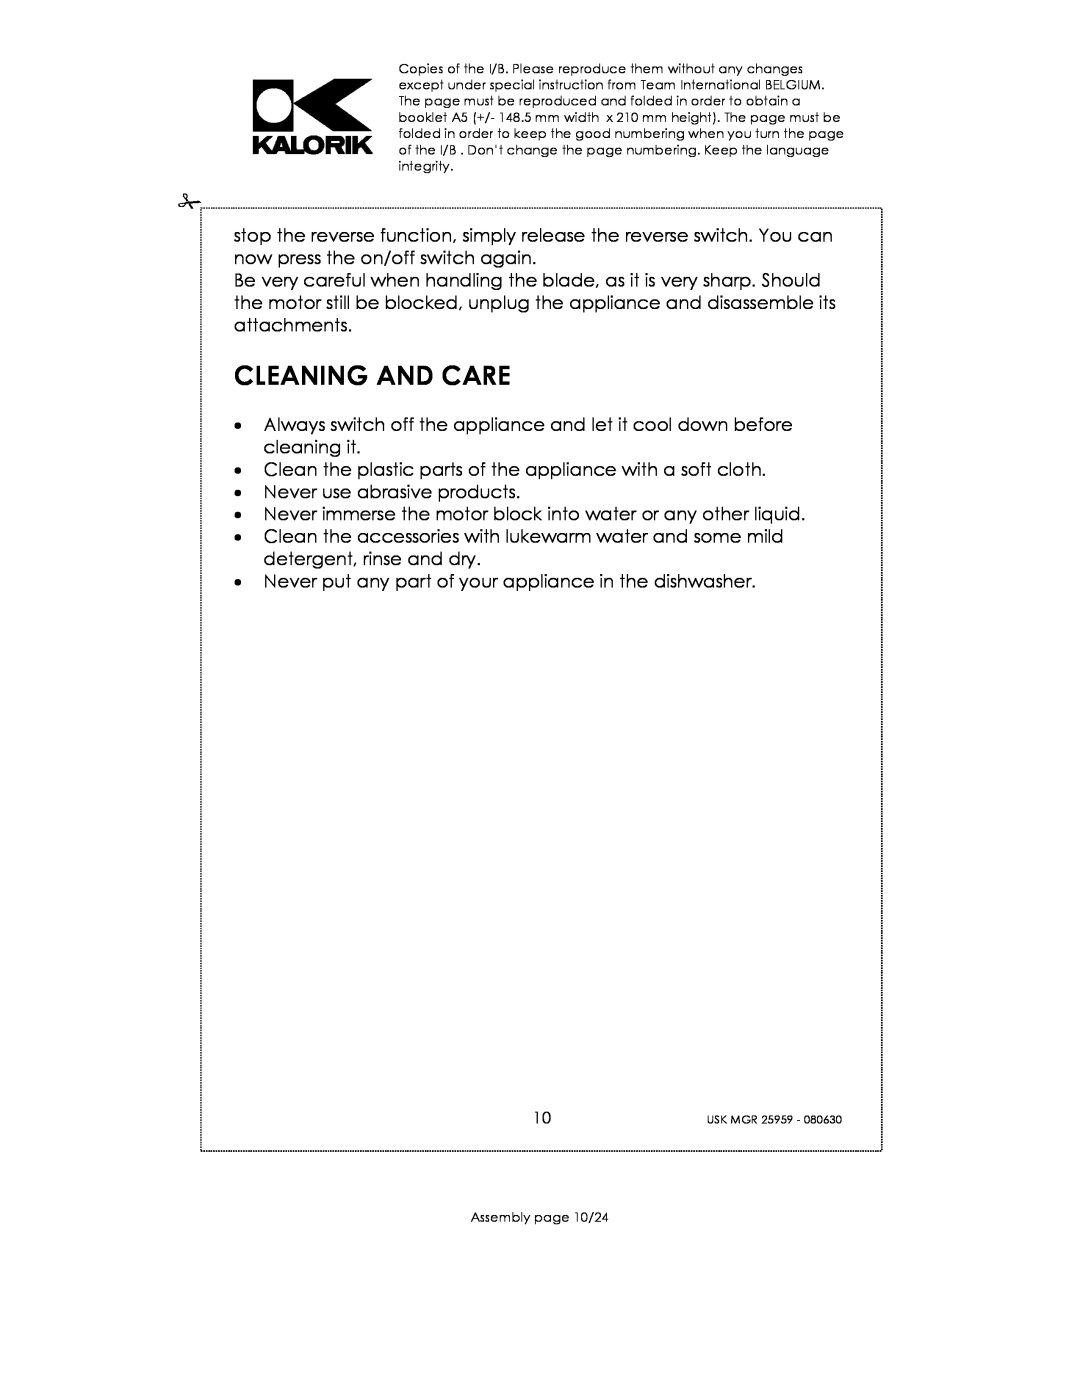 Kalorik USK MGR 25959 manual Cleaning And Care 